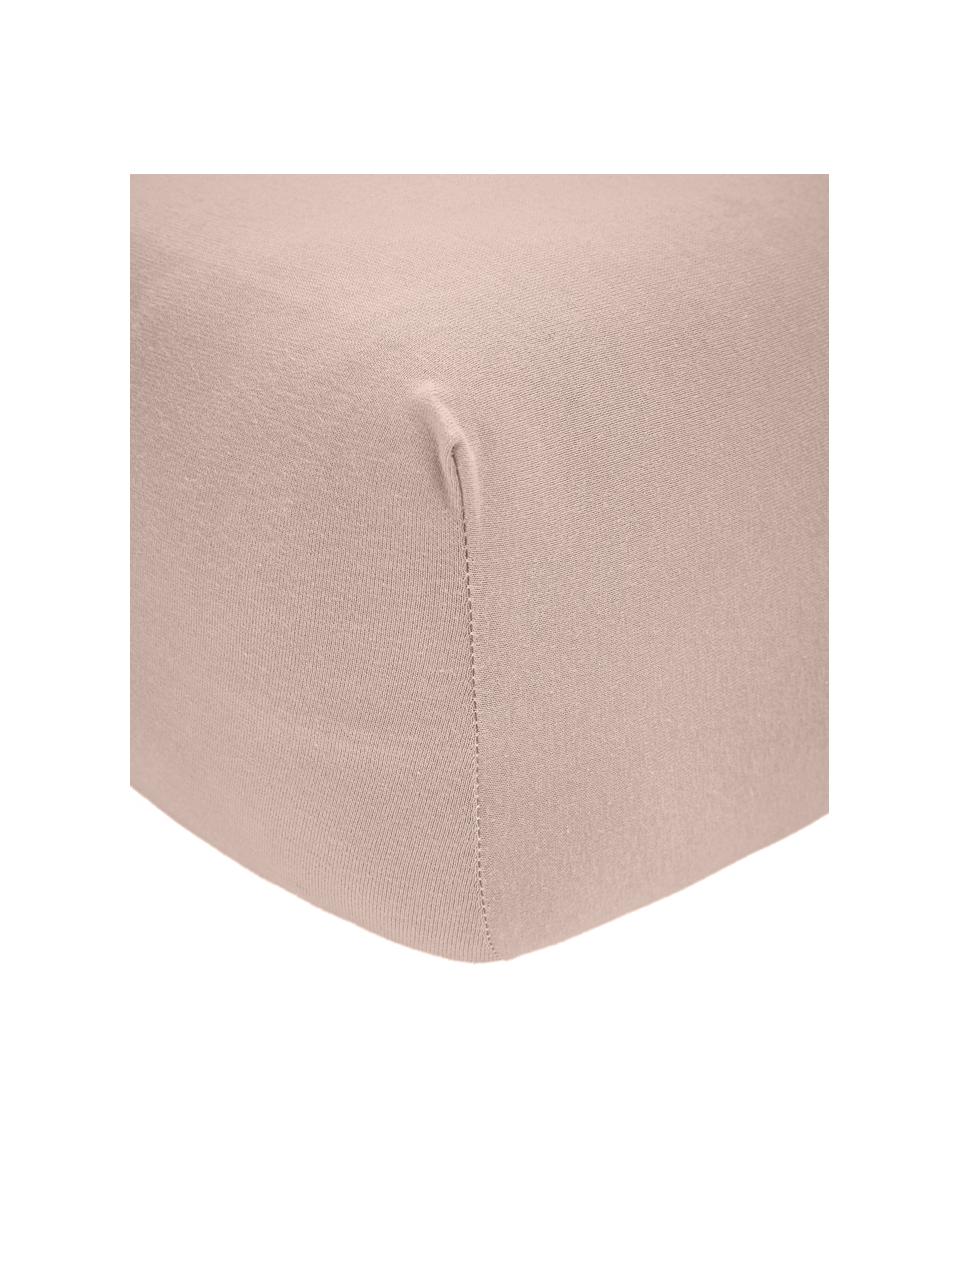 Lenzuolo con angoli in jersey-elastan color taupe Lara, 95% cotone, 5% elastan, Taupe, 200 x 200 cm